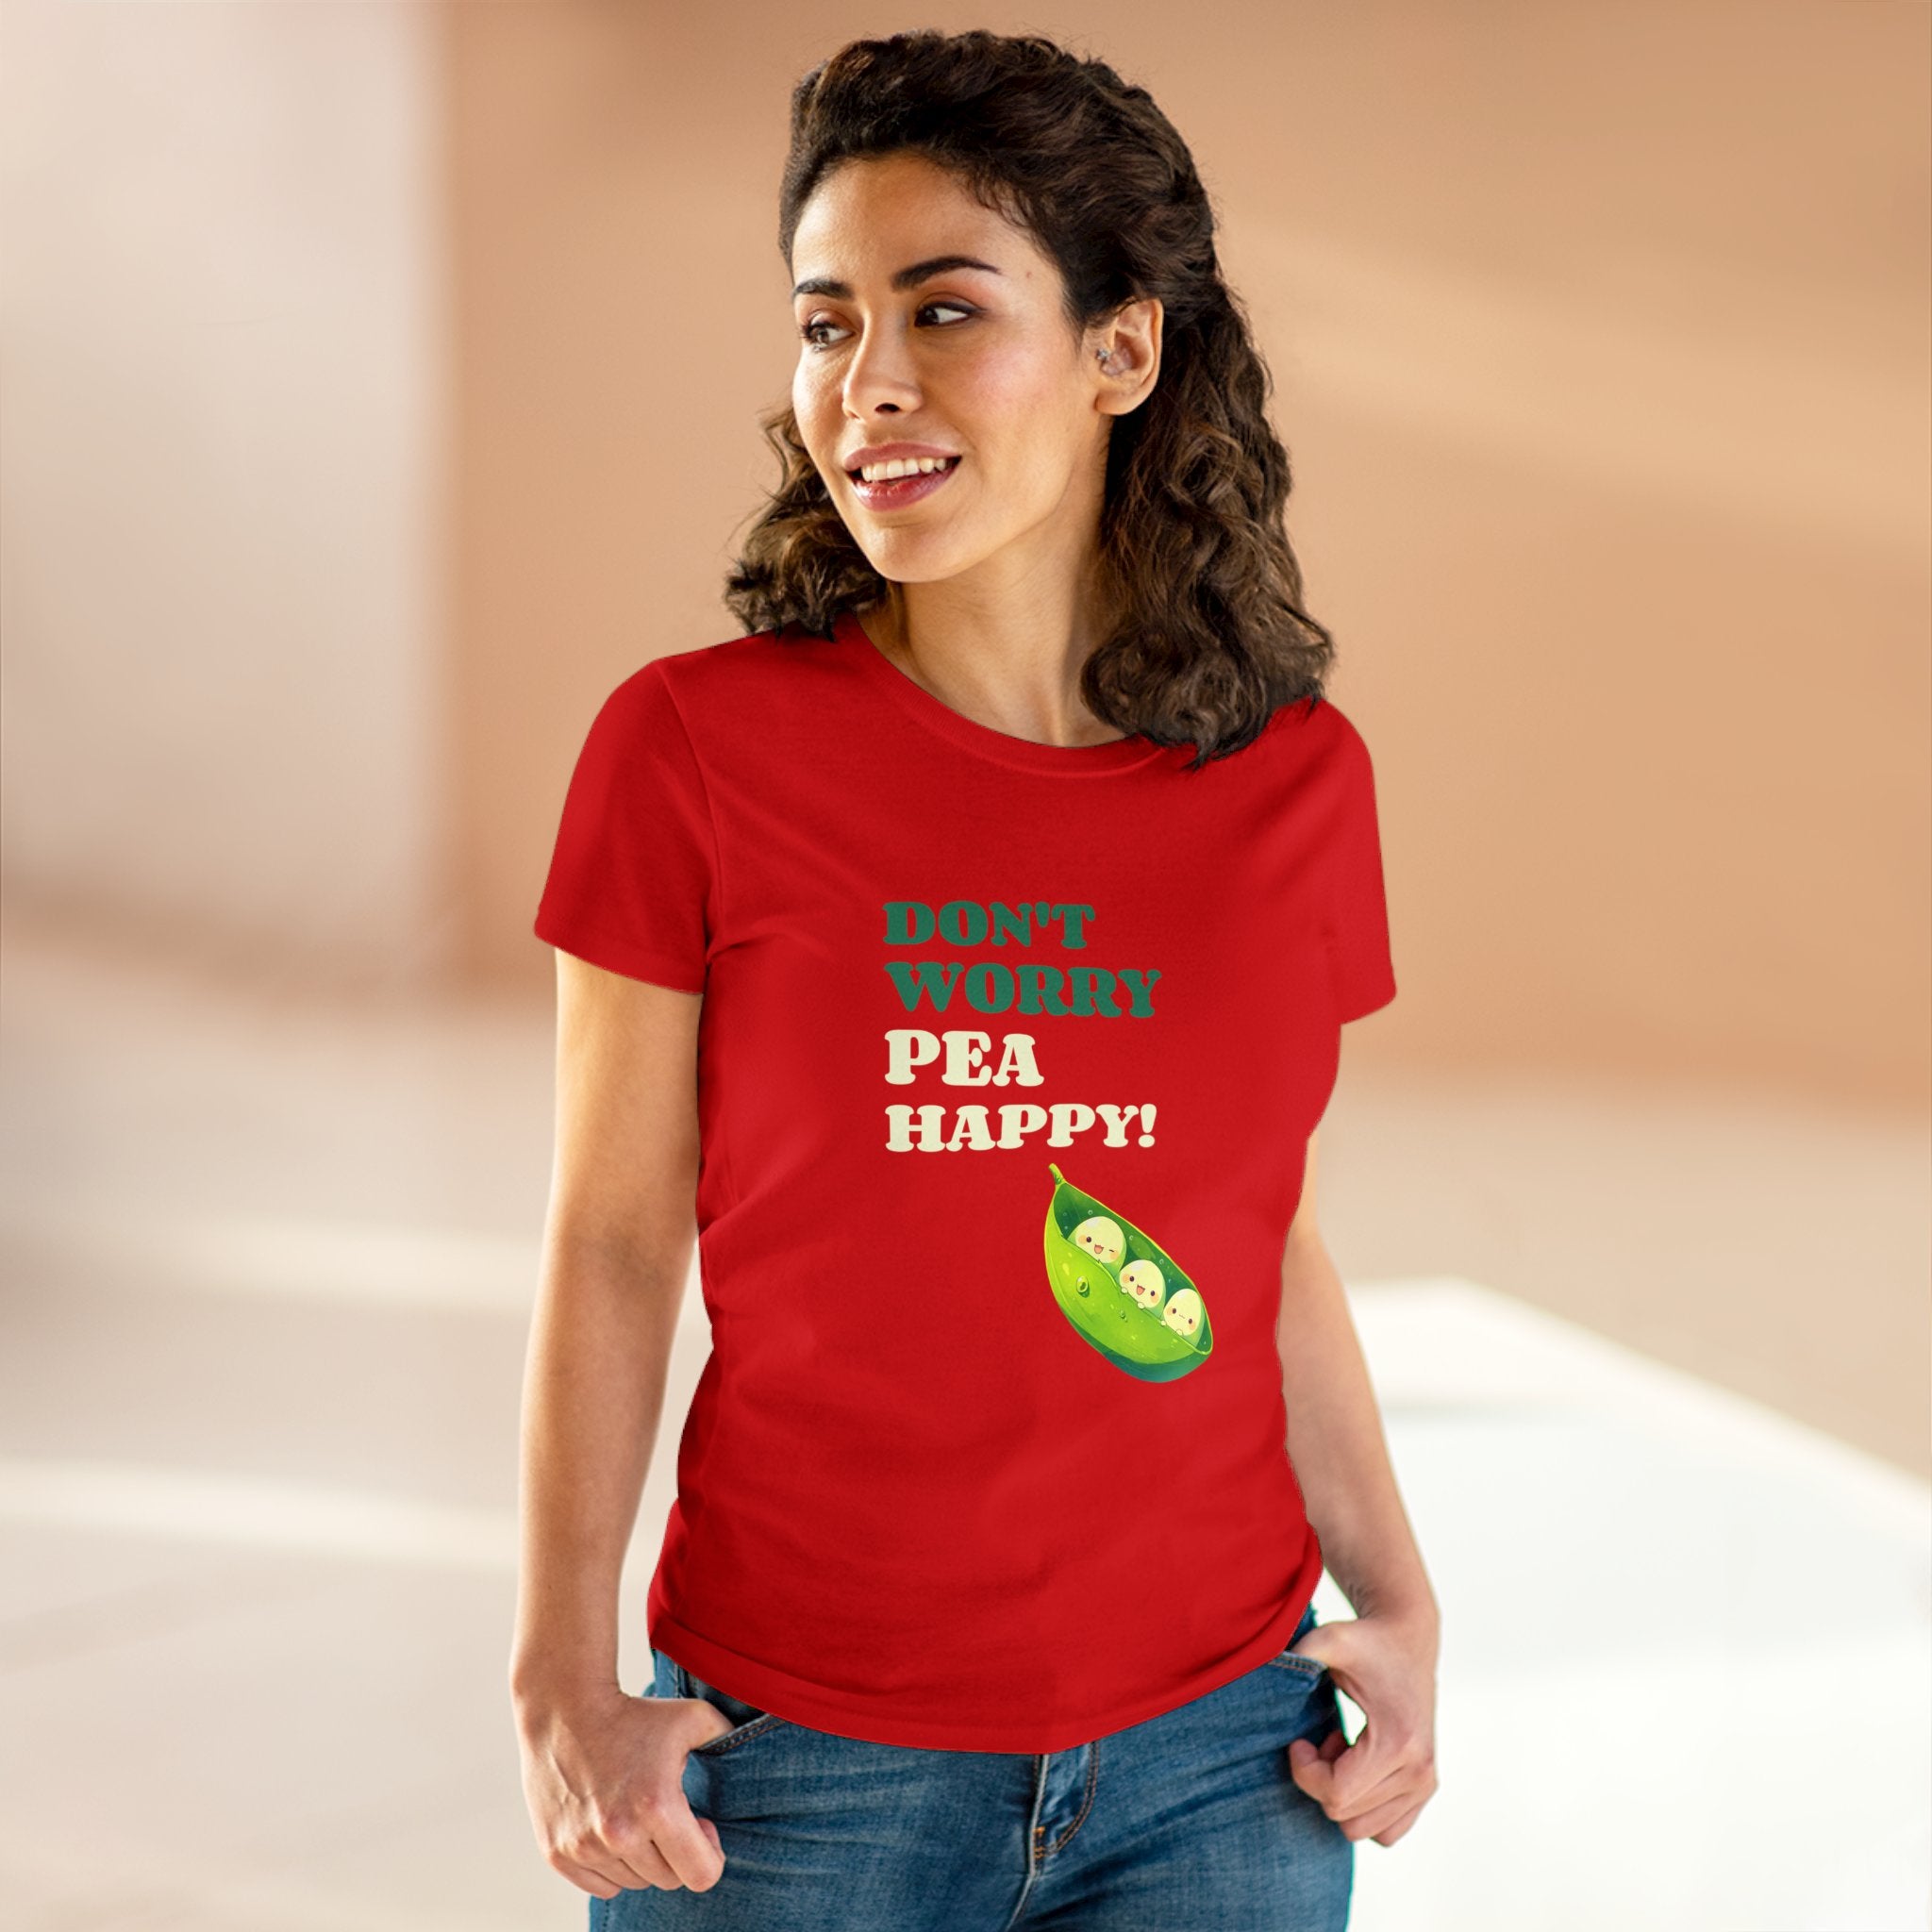 PEA Happy - Women's Tee